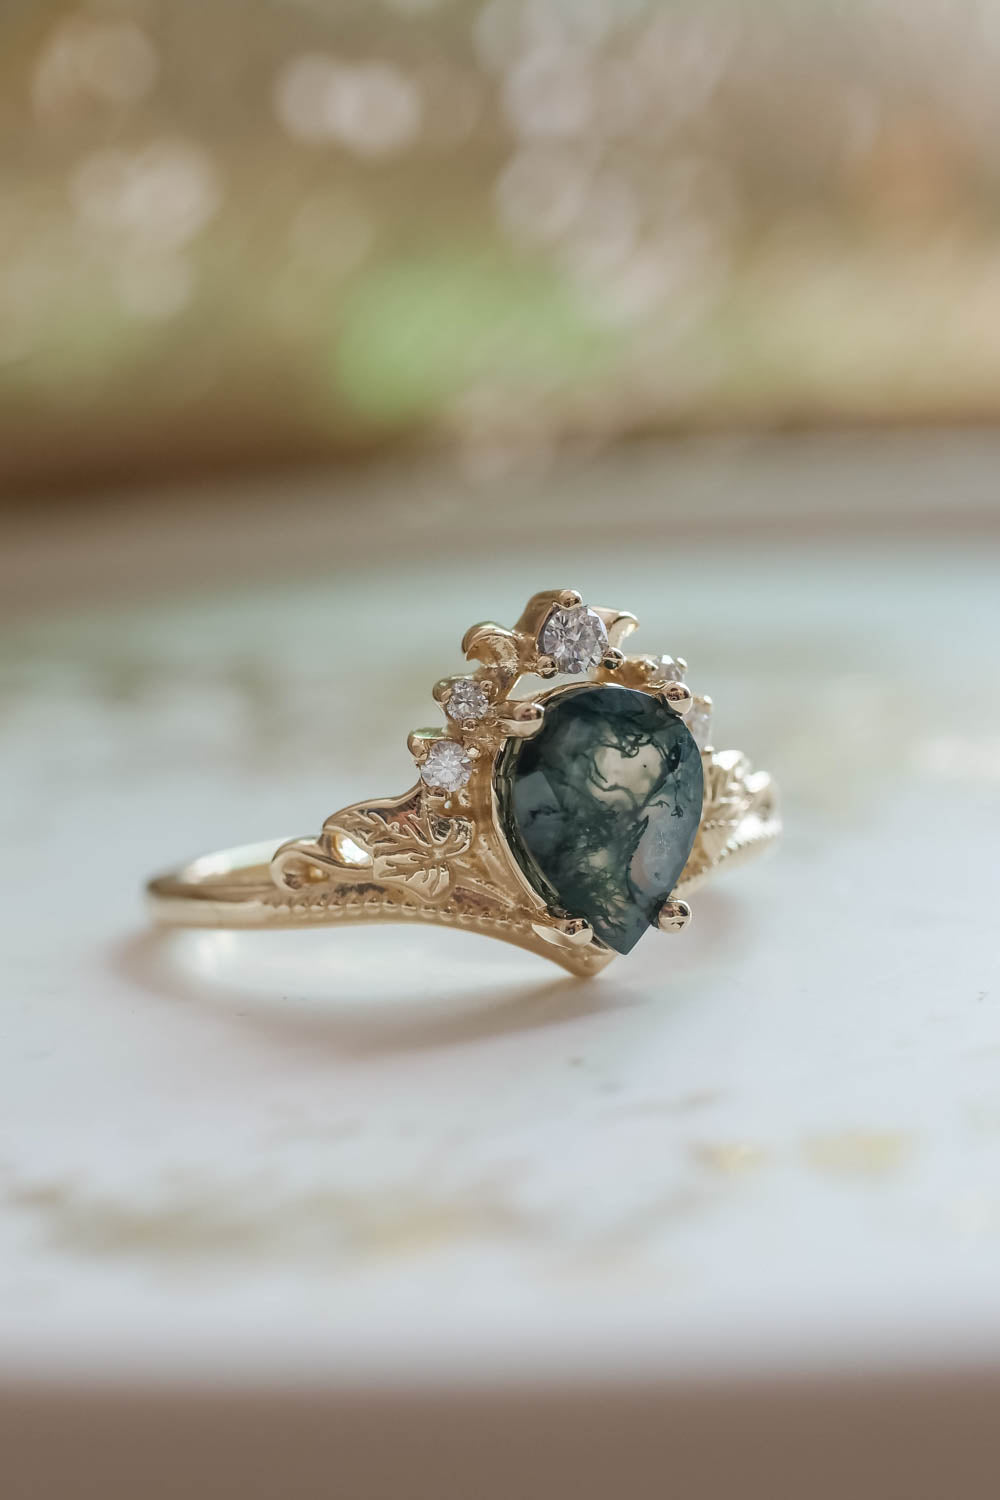 The Three Stone Engagement Ring | Forevermark